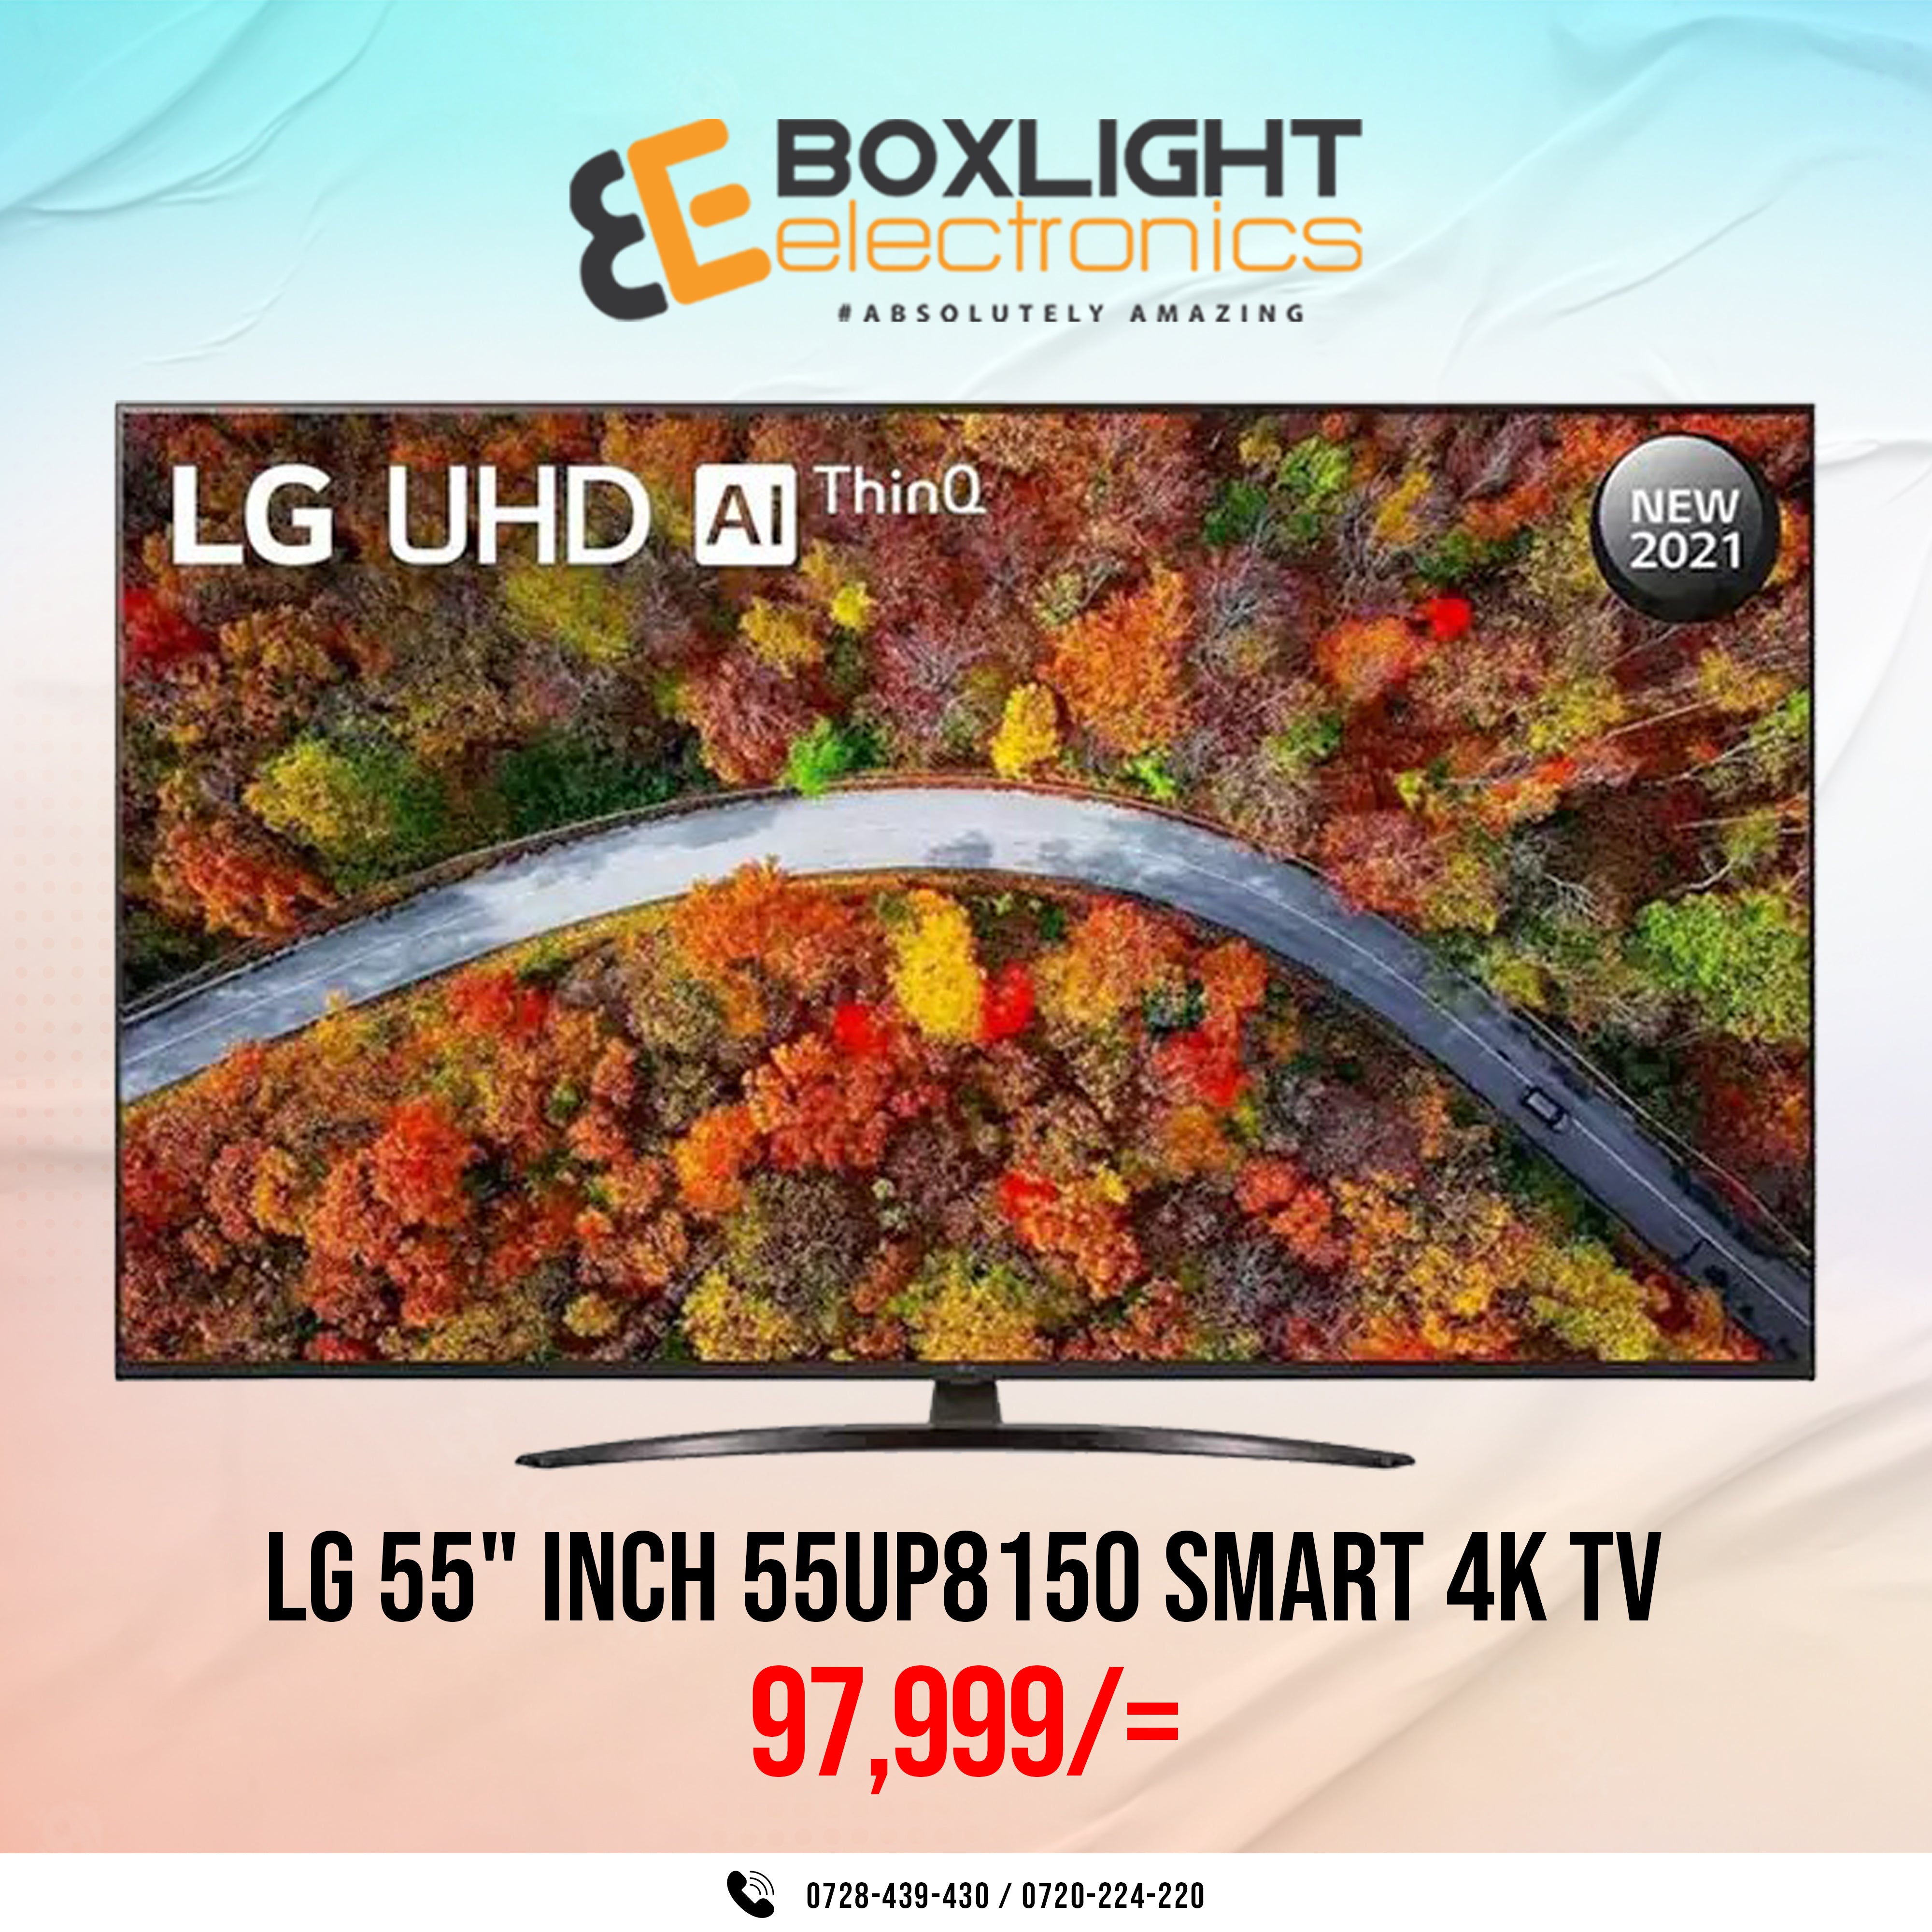 LG 55" Inch 55UP8150 Cinema Screen Smart 4K TV